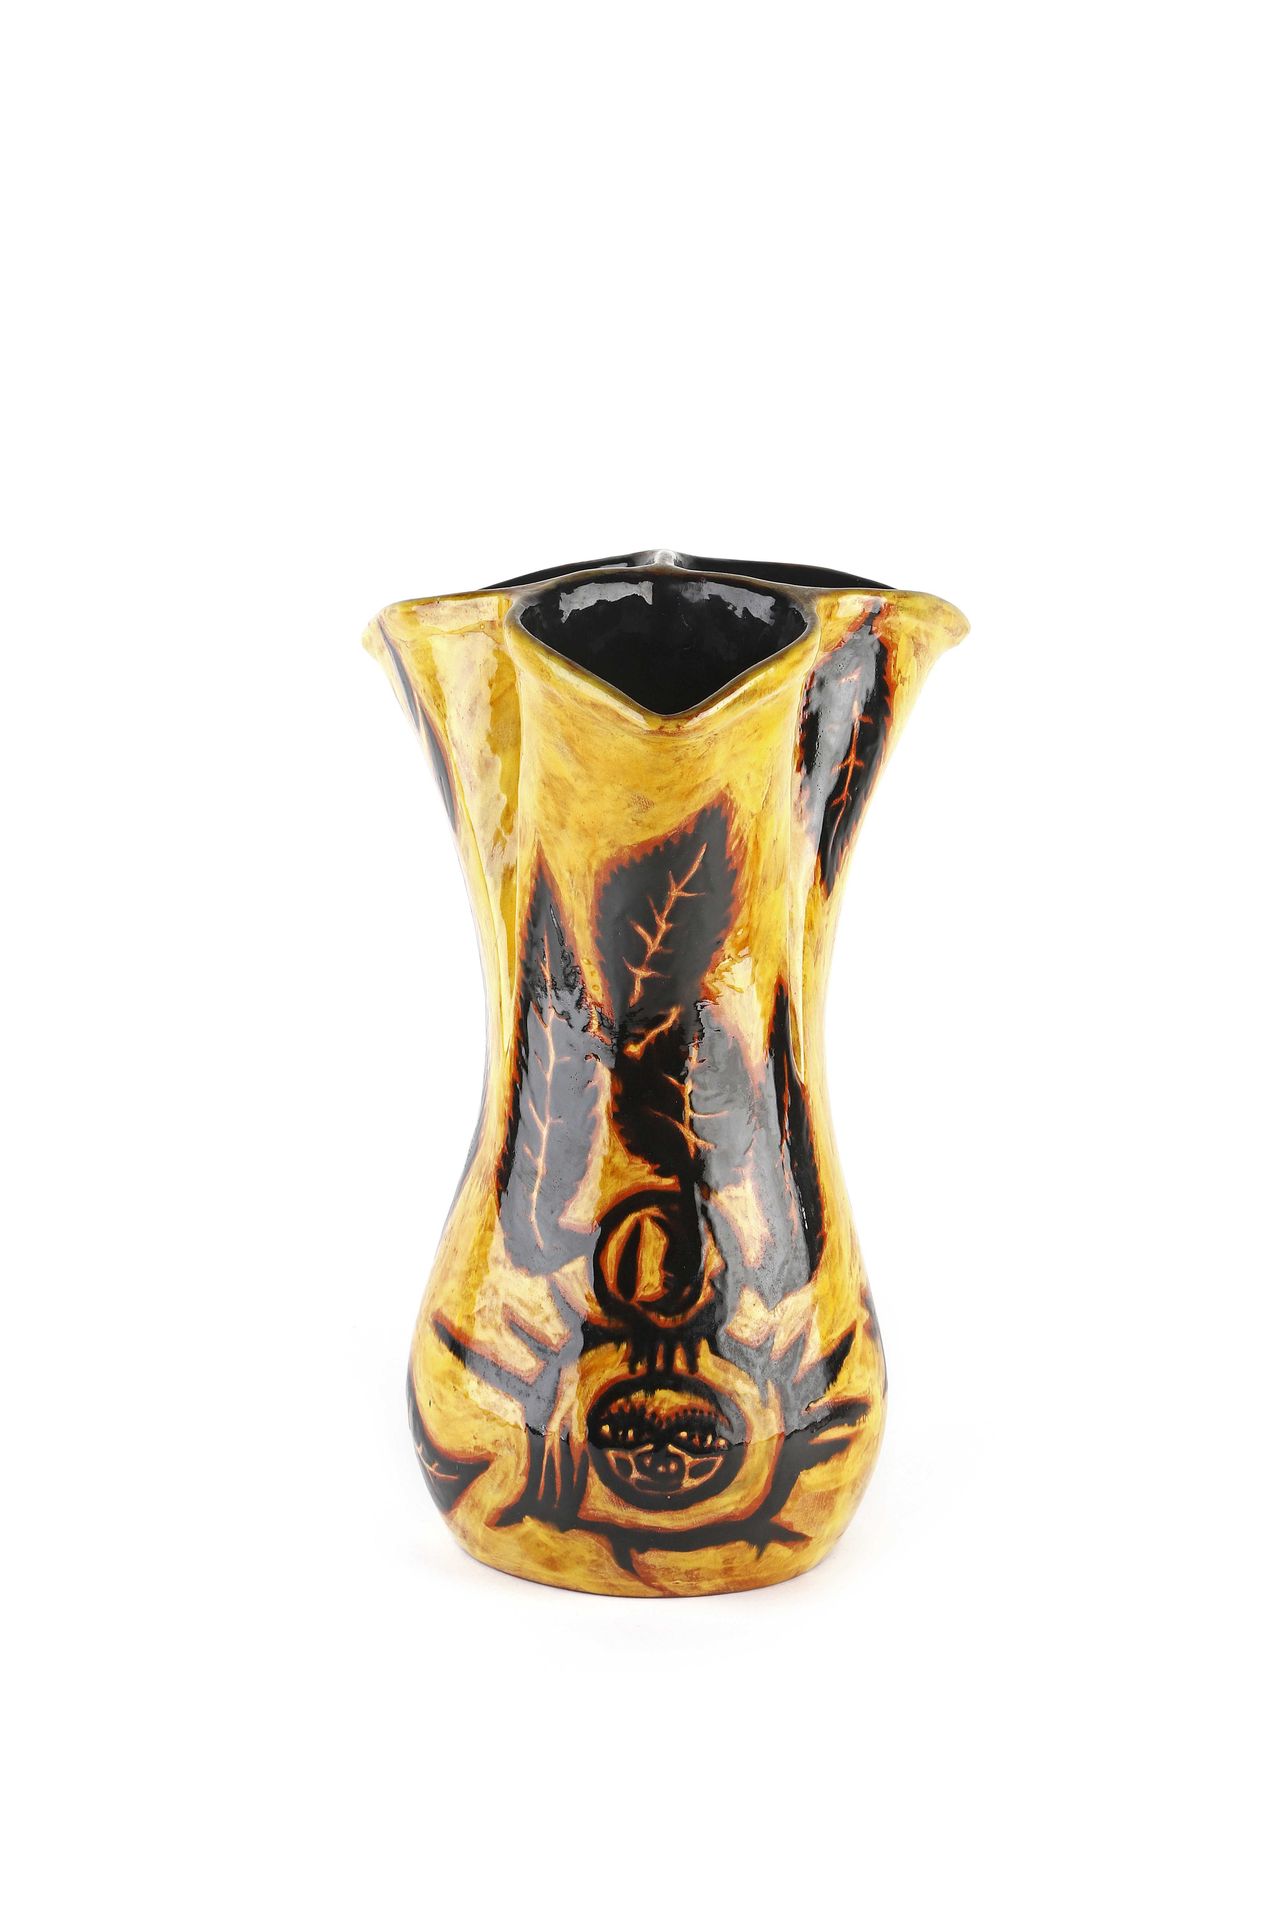 Jean LURÇAT (1892-1966) Vase
Earthenware 
Signed
H. 40 cm.
Sant-Vicens, circa 19&hellip;